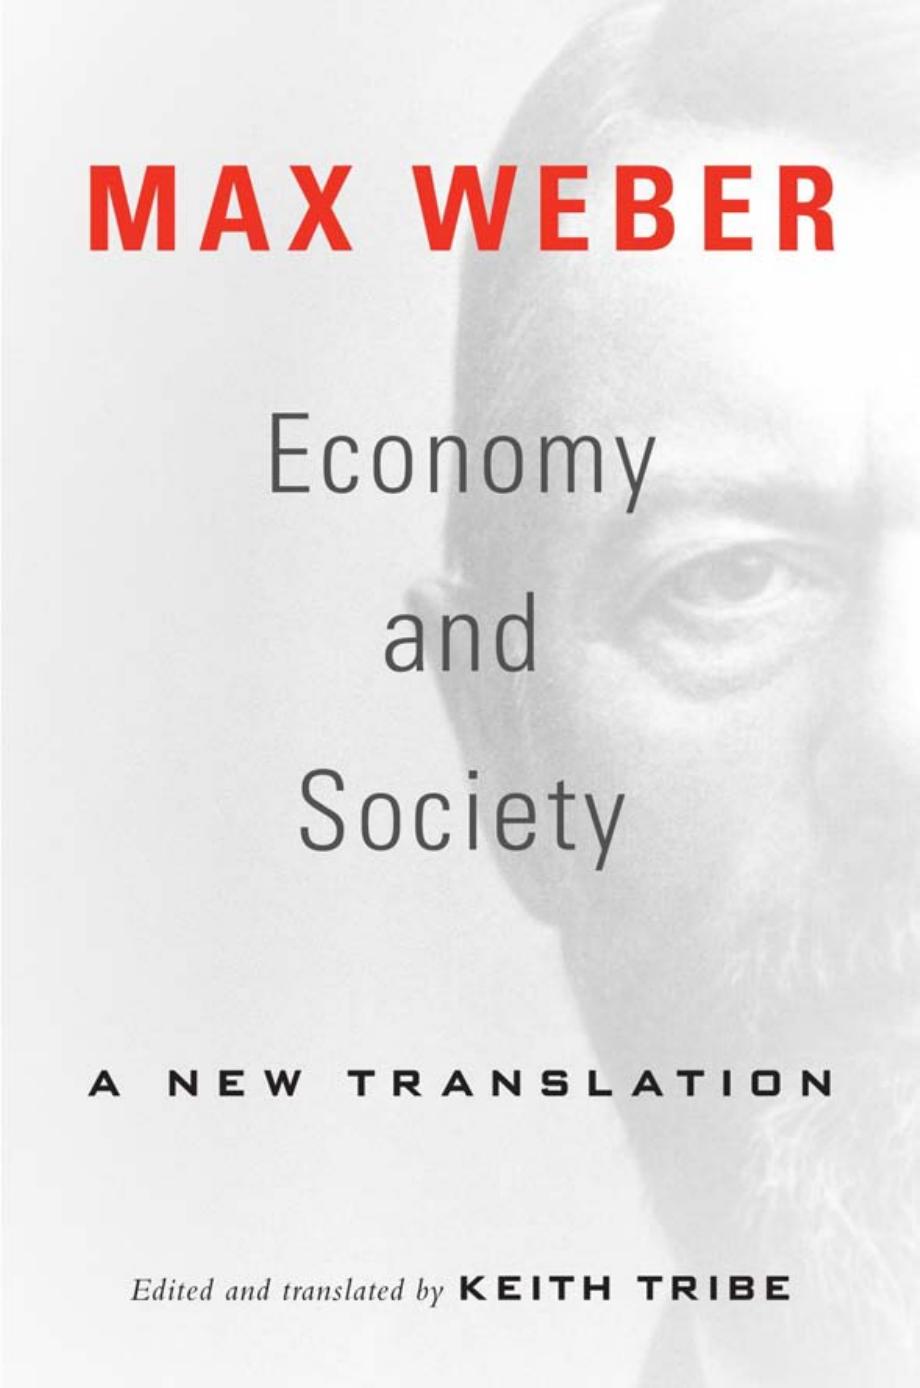 Economy and Society: A New Translation. I